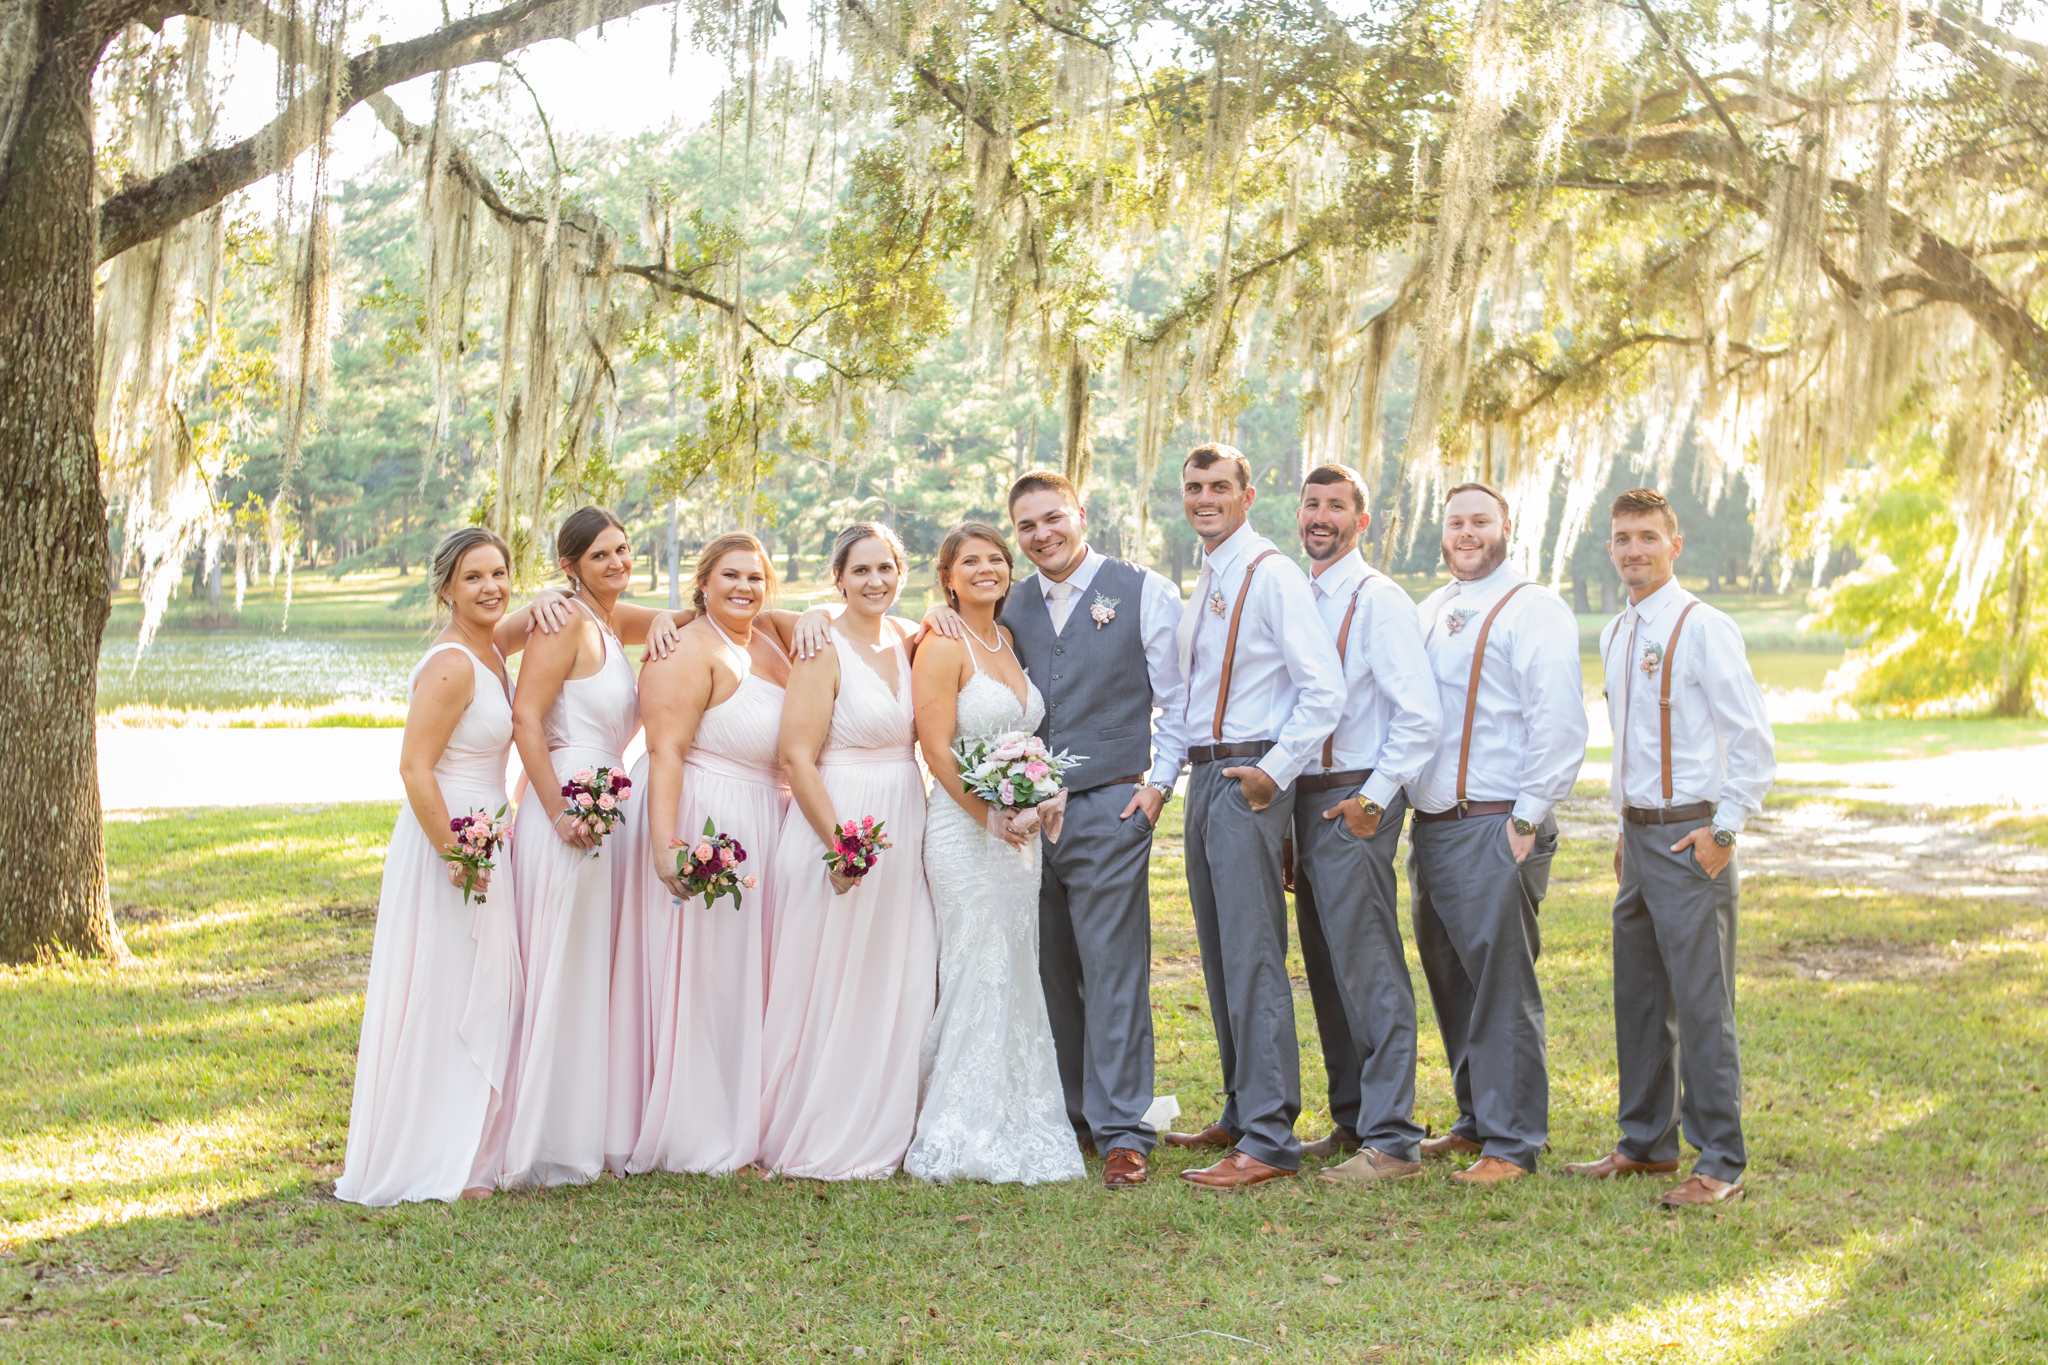 Haley + Jesse Barrentine | Tallahassee FL Wedding